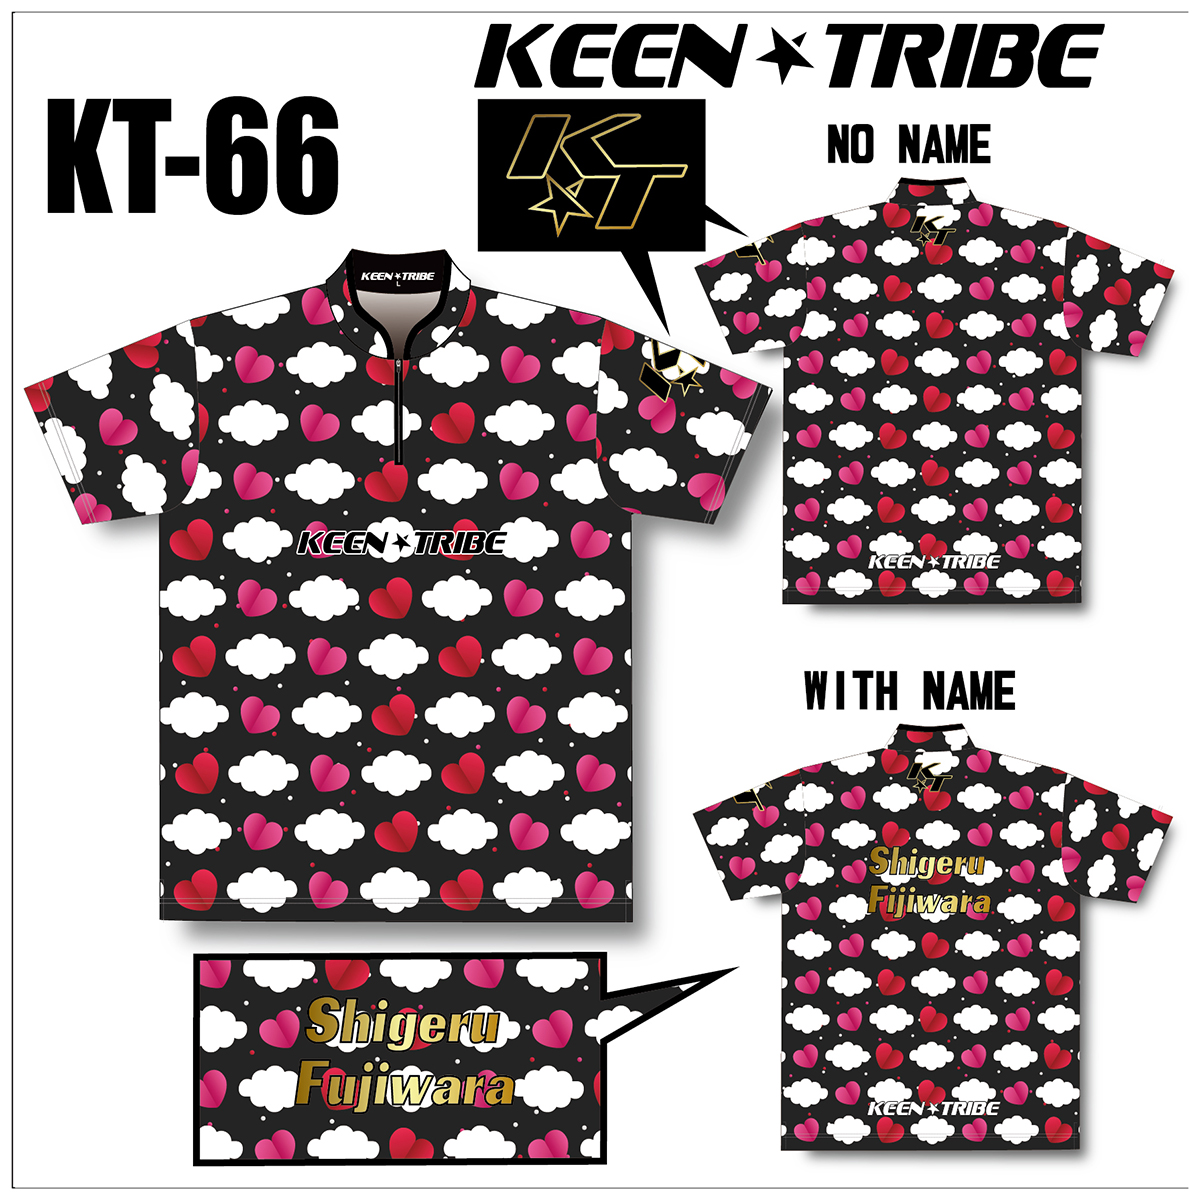 KEEN ★ TRIBE　KT-66(受注生産)【特別価格】